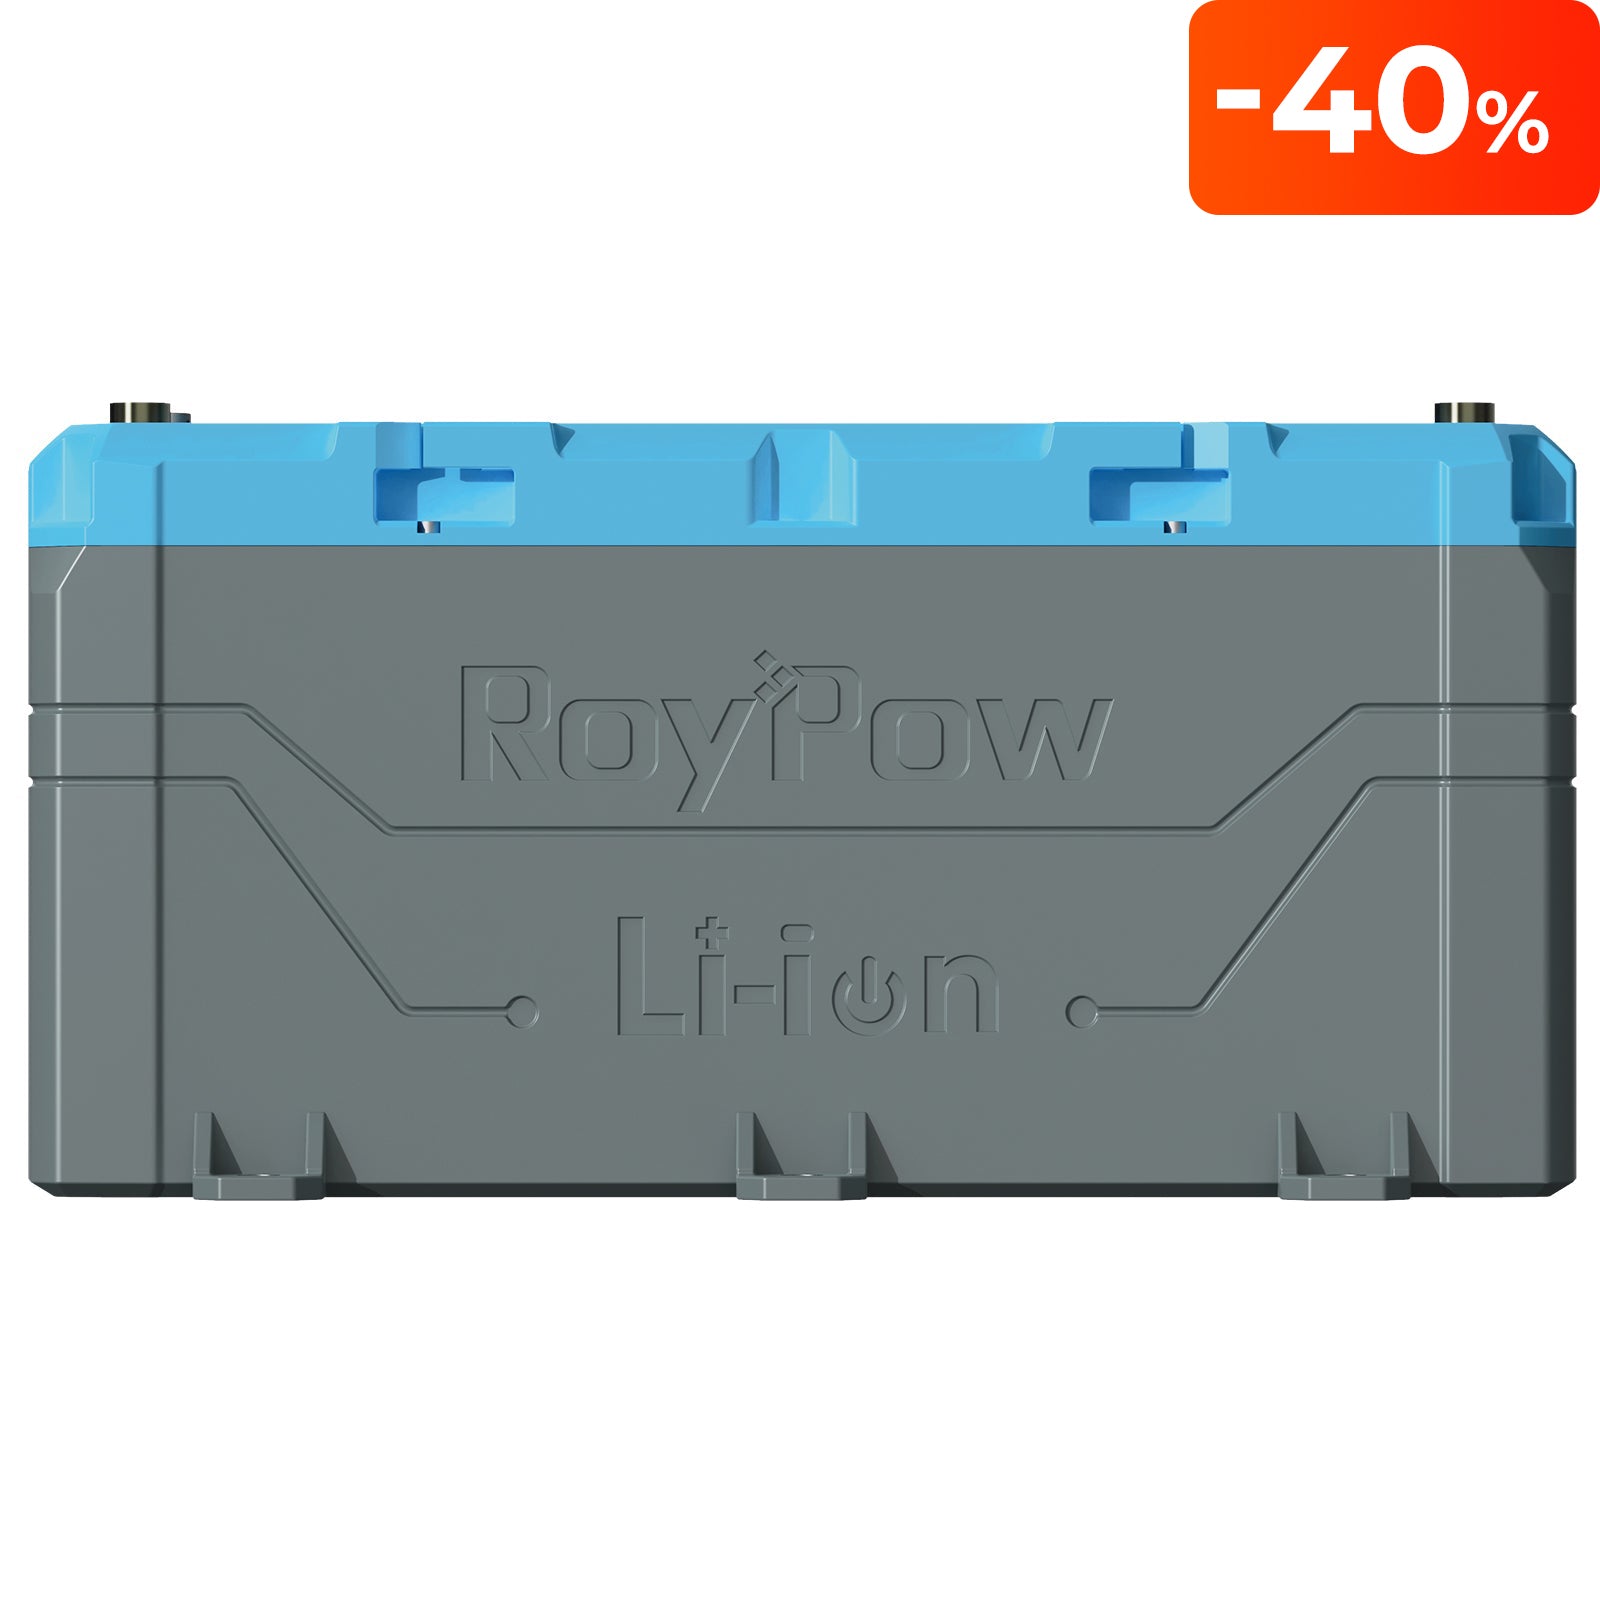 RoyPow 36V 100AH LiFePO4 battery for trolling motors